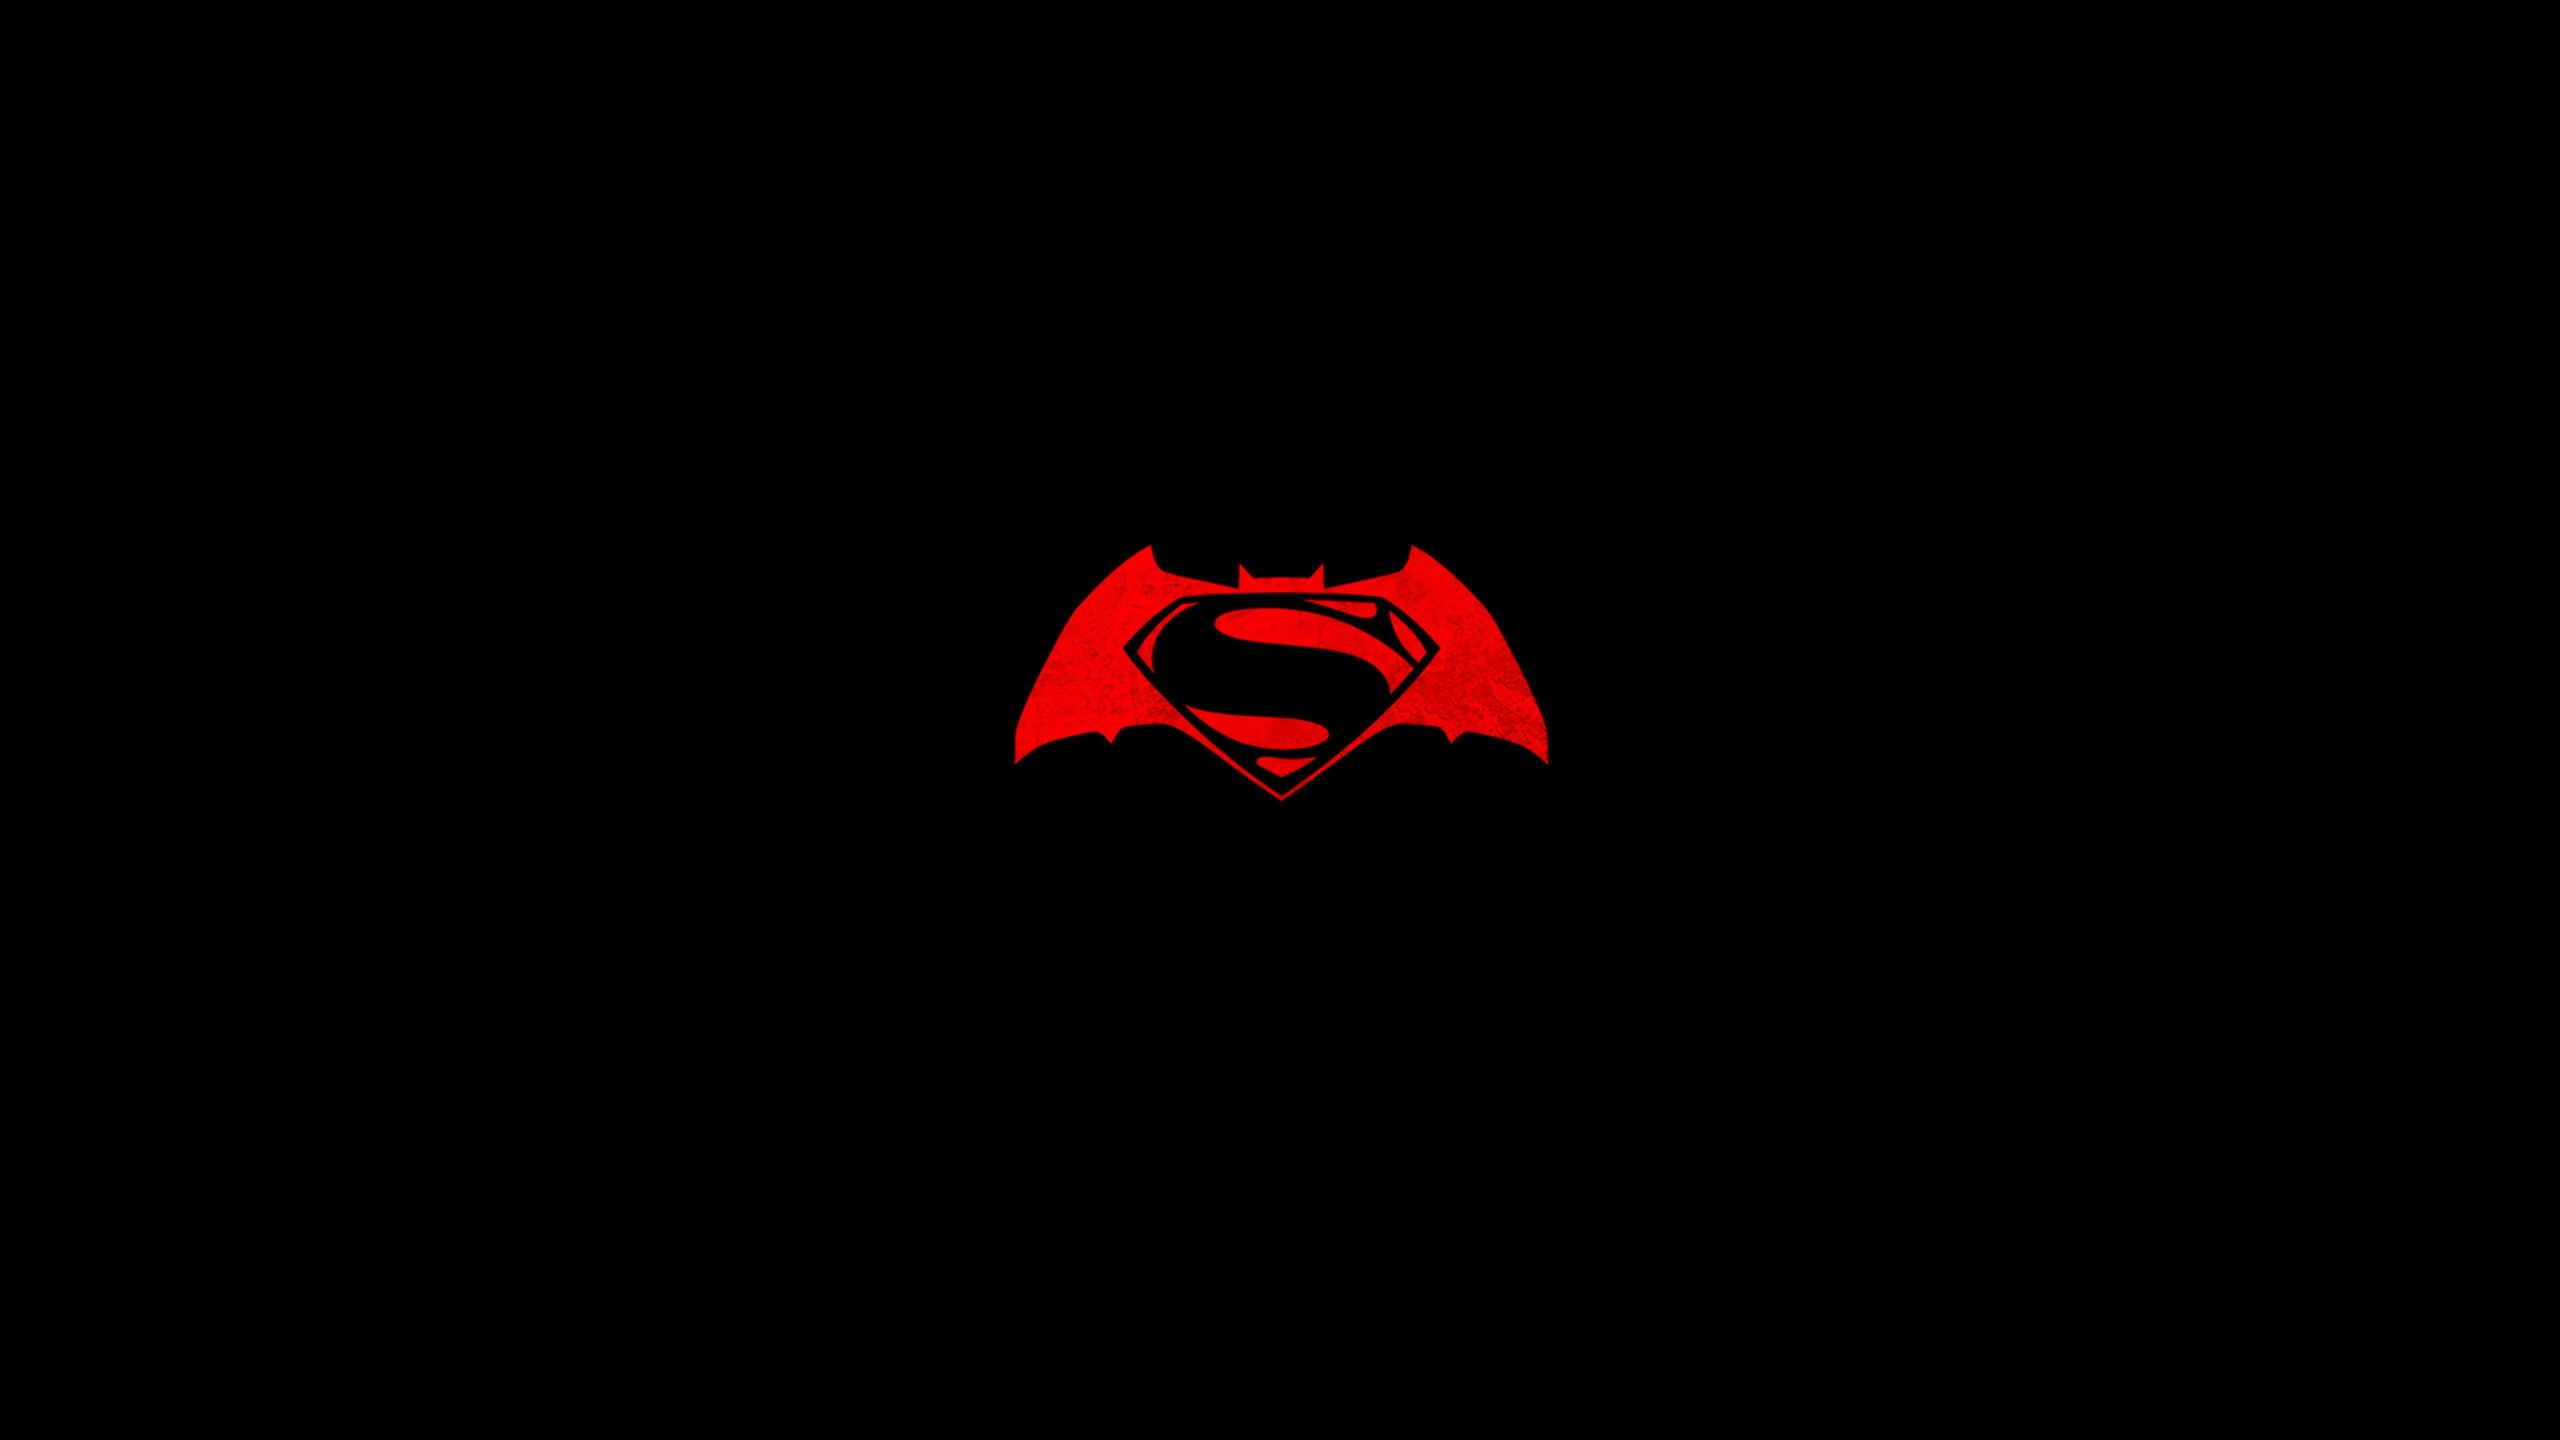 Batman v Superman logo Wallpaper for Desktop 2560x1440